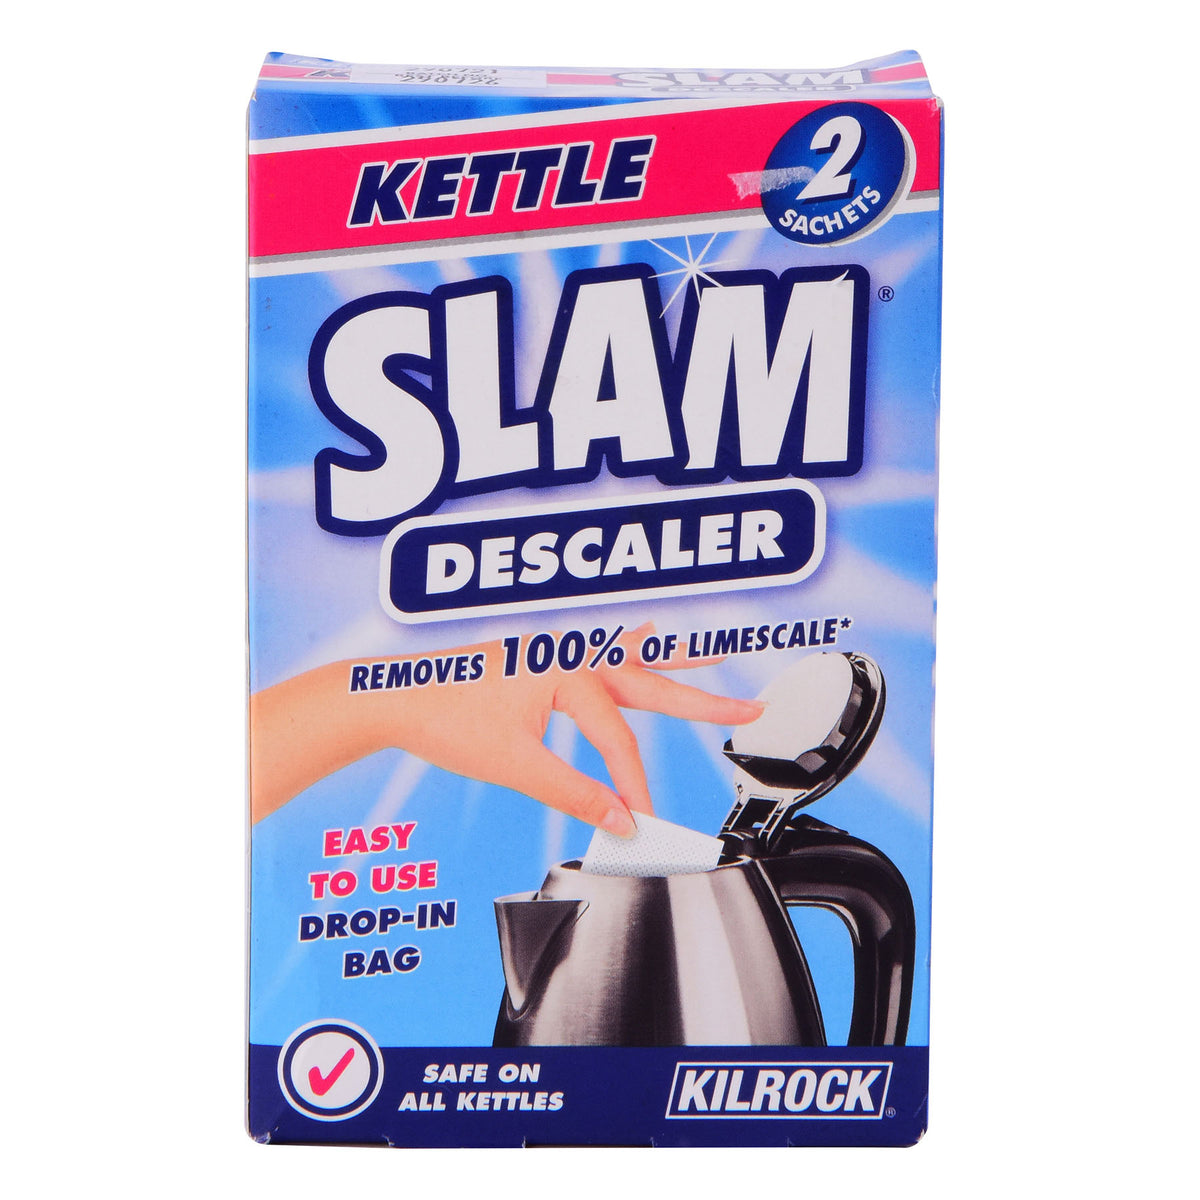 Slam Kettle Descales Removes 100% of limescale.